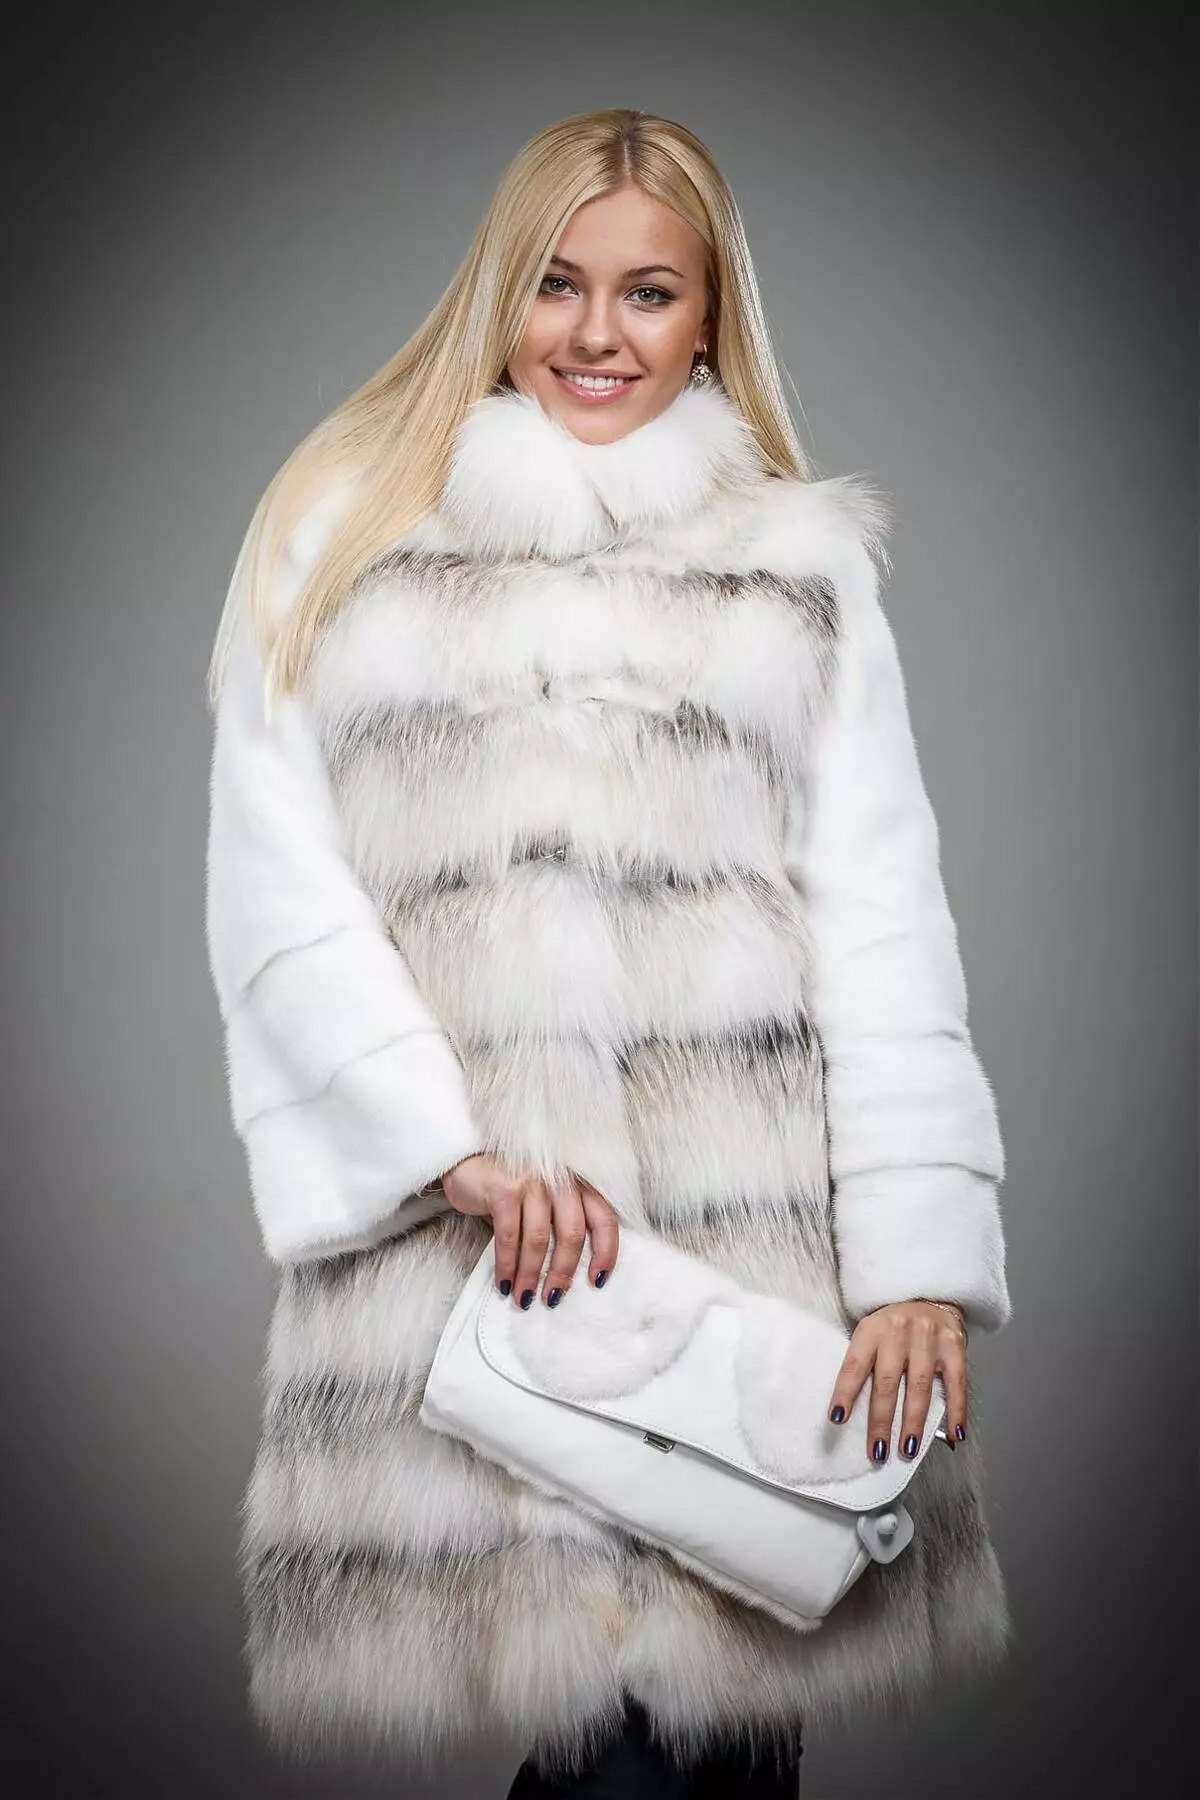 Mermeriny Fur Coats (37 foto): Recensione di modelli eleganti del marchio 325_3